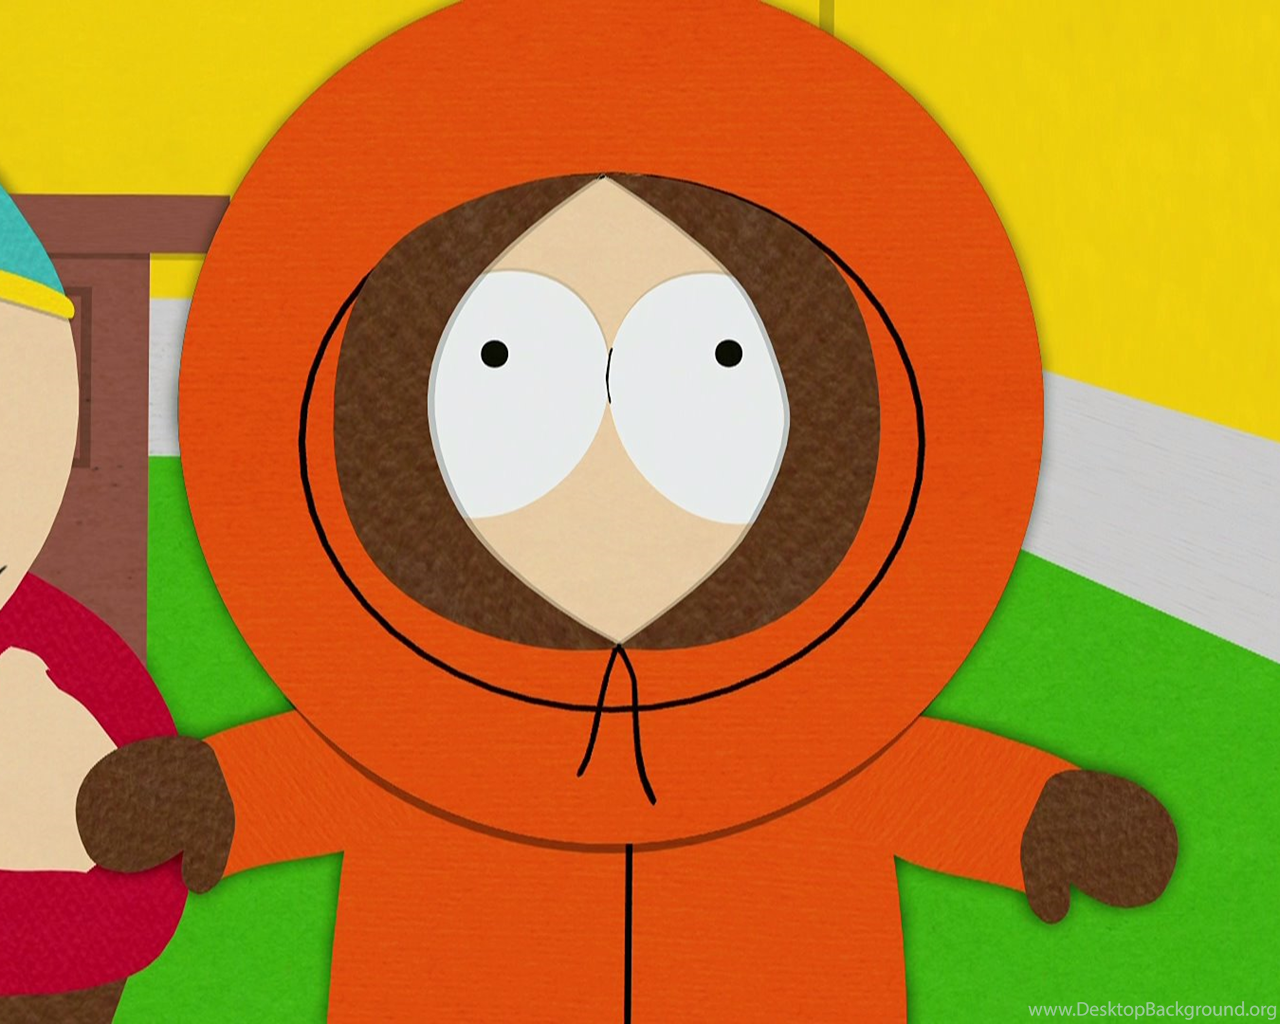 Download South Park Eric Cartman Kenny Mccormick Fullscreen Standart 5:4 12...